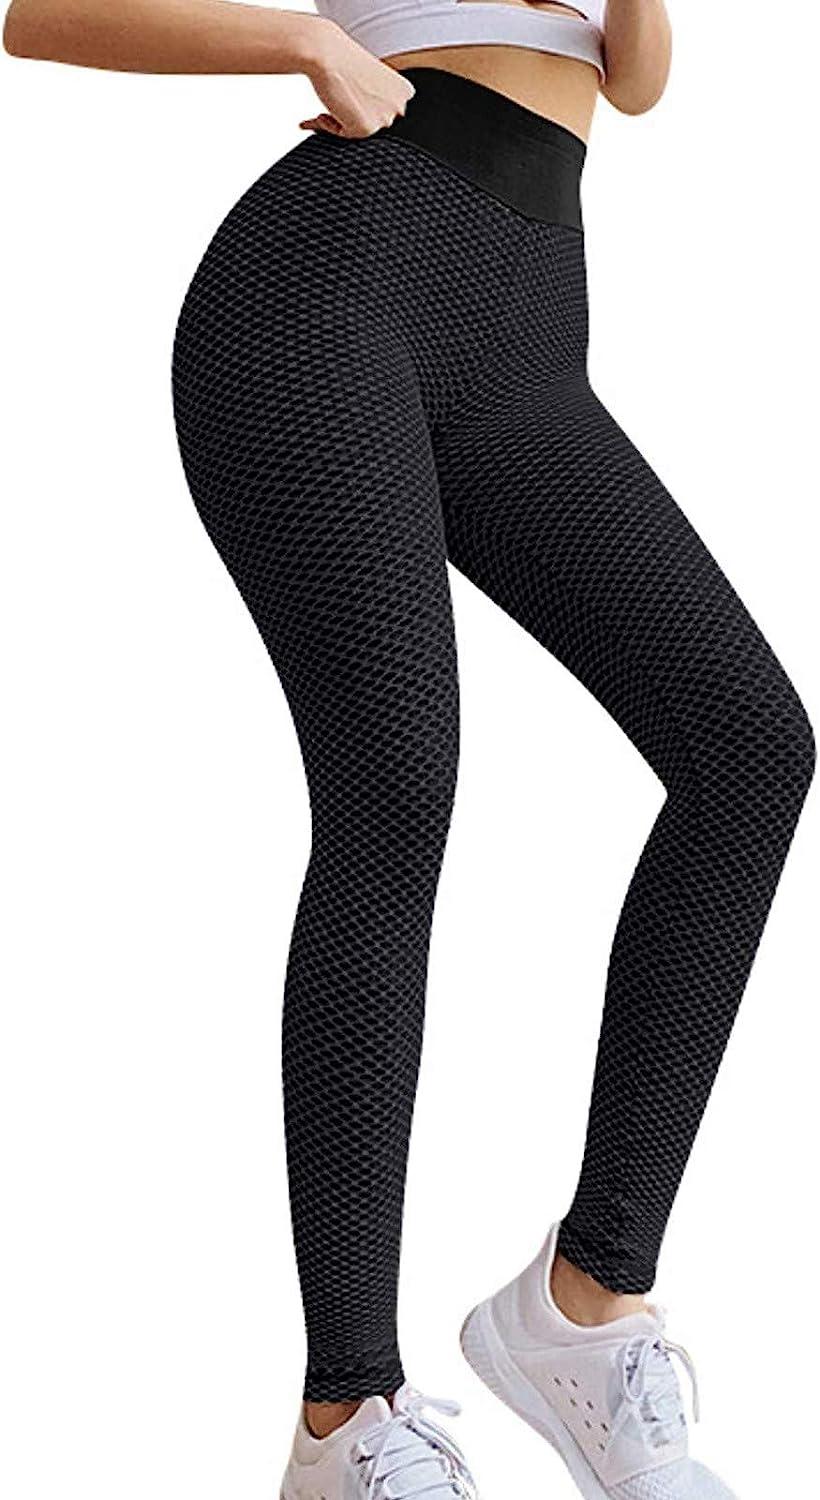 Nike Pants Womens X Large Black Stretch Activewear Legging Pants